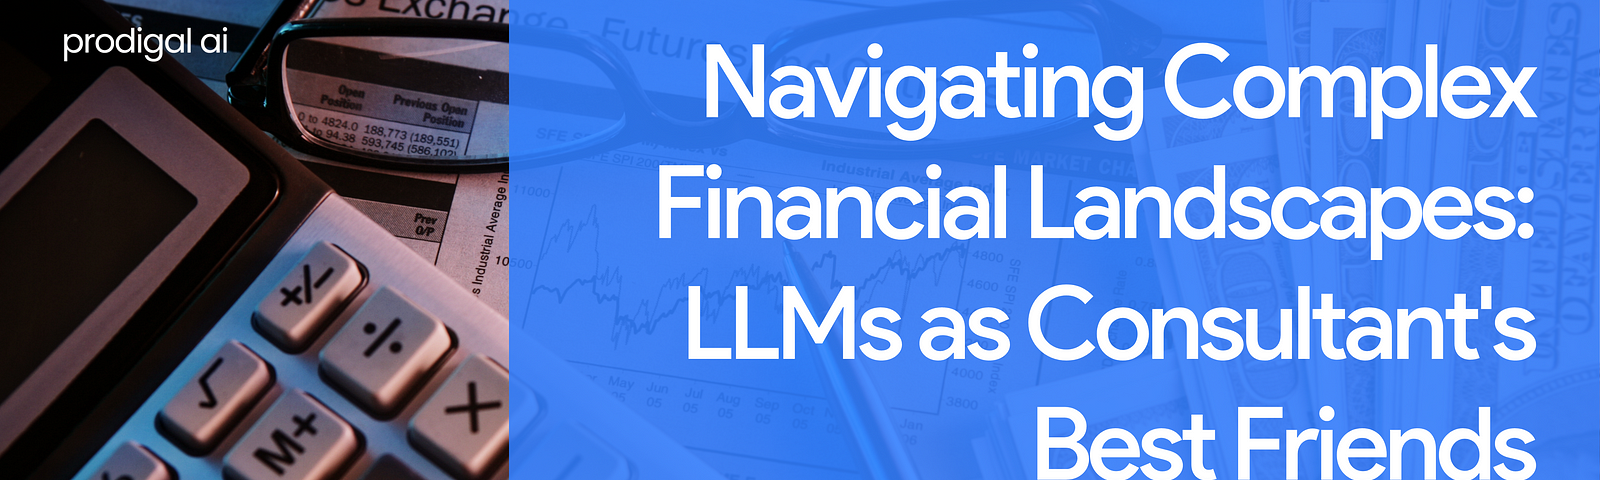 Navigating Complex Financial Landscapes: LLMs as Consultant’s Best Friends